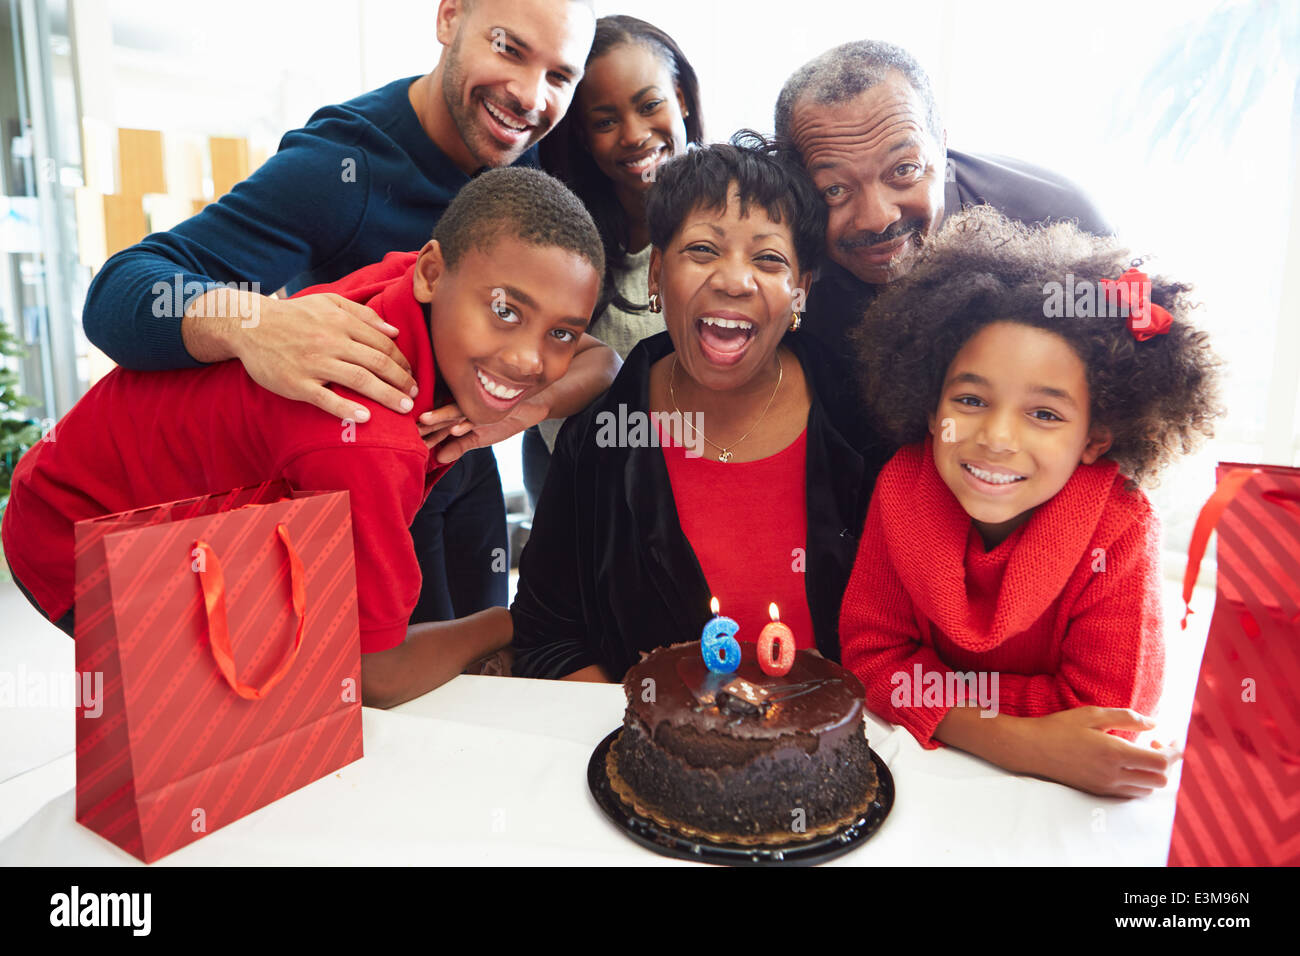 Family Celebrating 60th Birthday Together Stock Photo